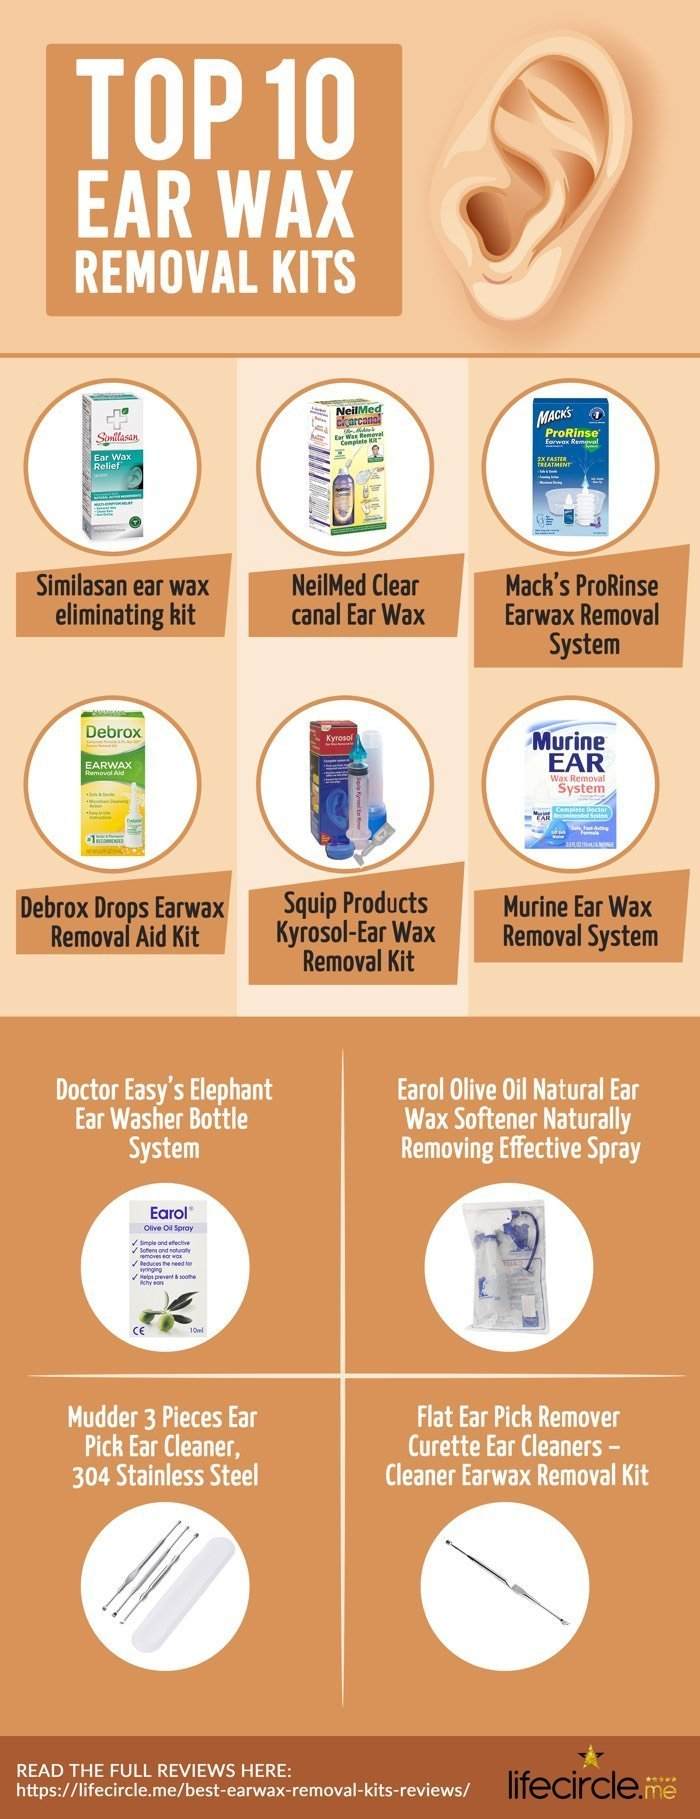 Top 10 ear wax removal kits